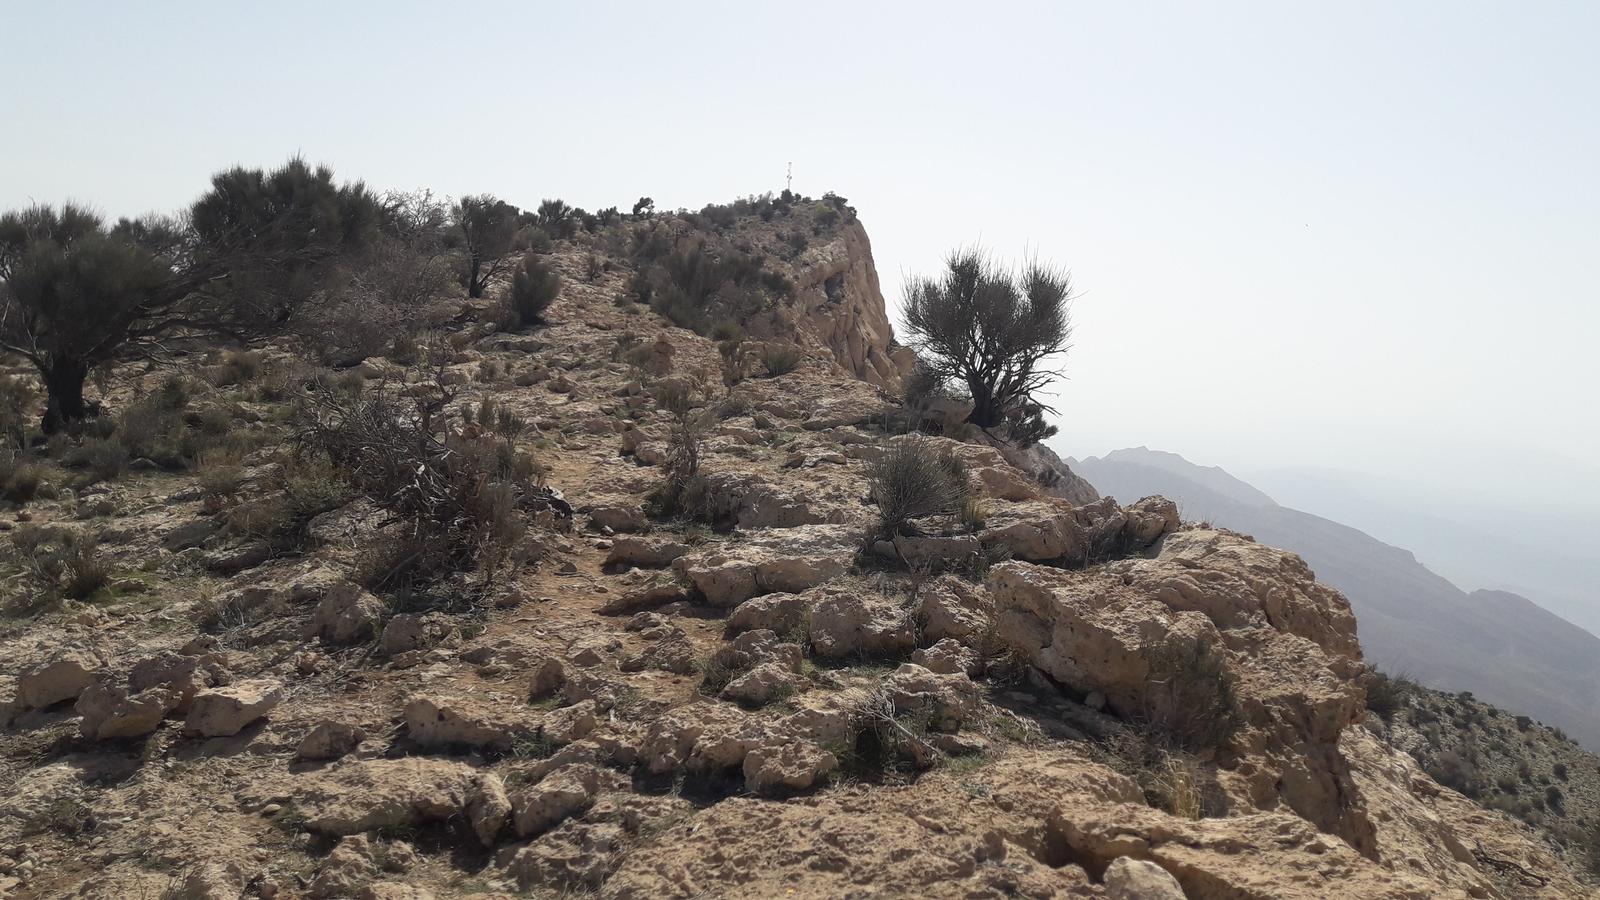 خط الراس بیرمی, Ridge of Beyrami